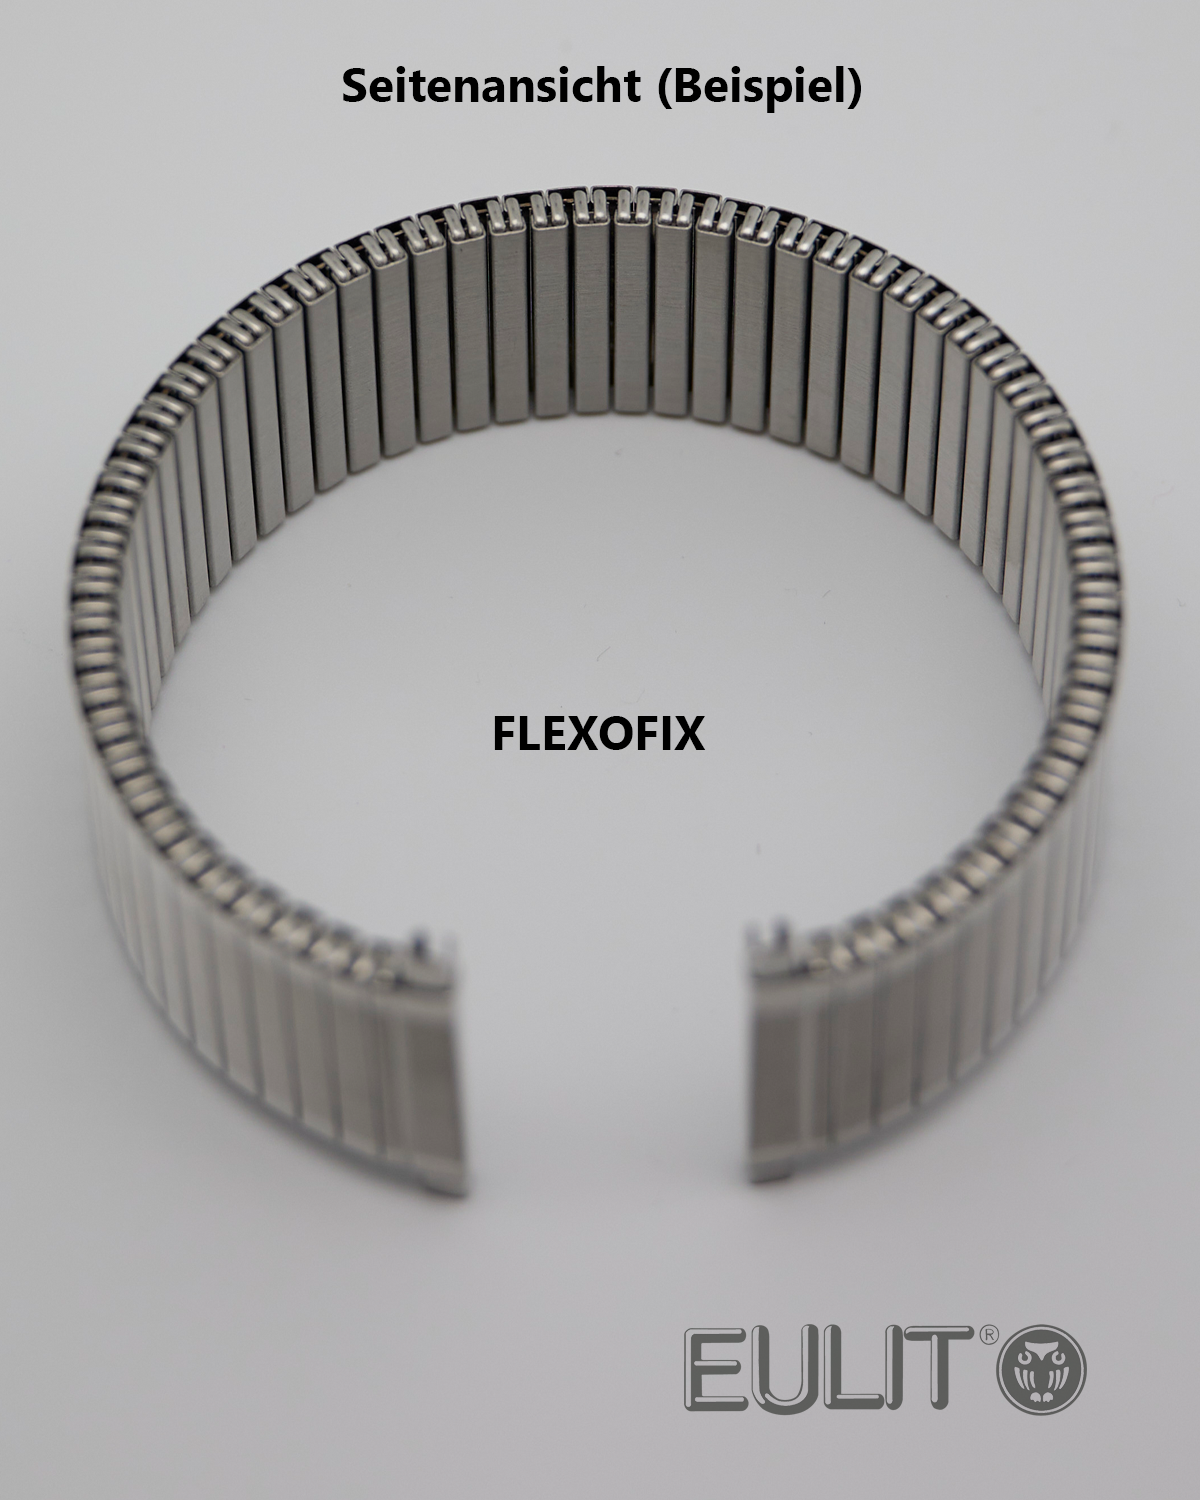 76-420141 EULIT FLEXOFlX 14-16 mm Edelstahl